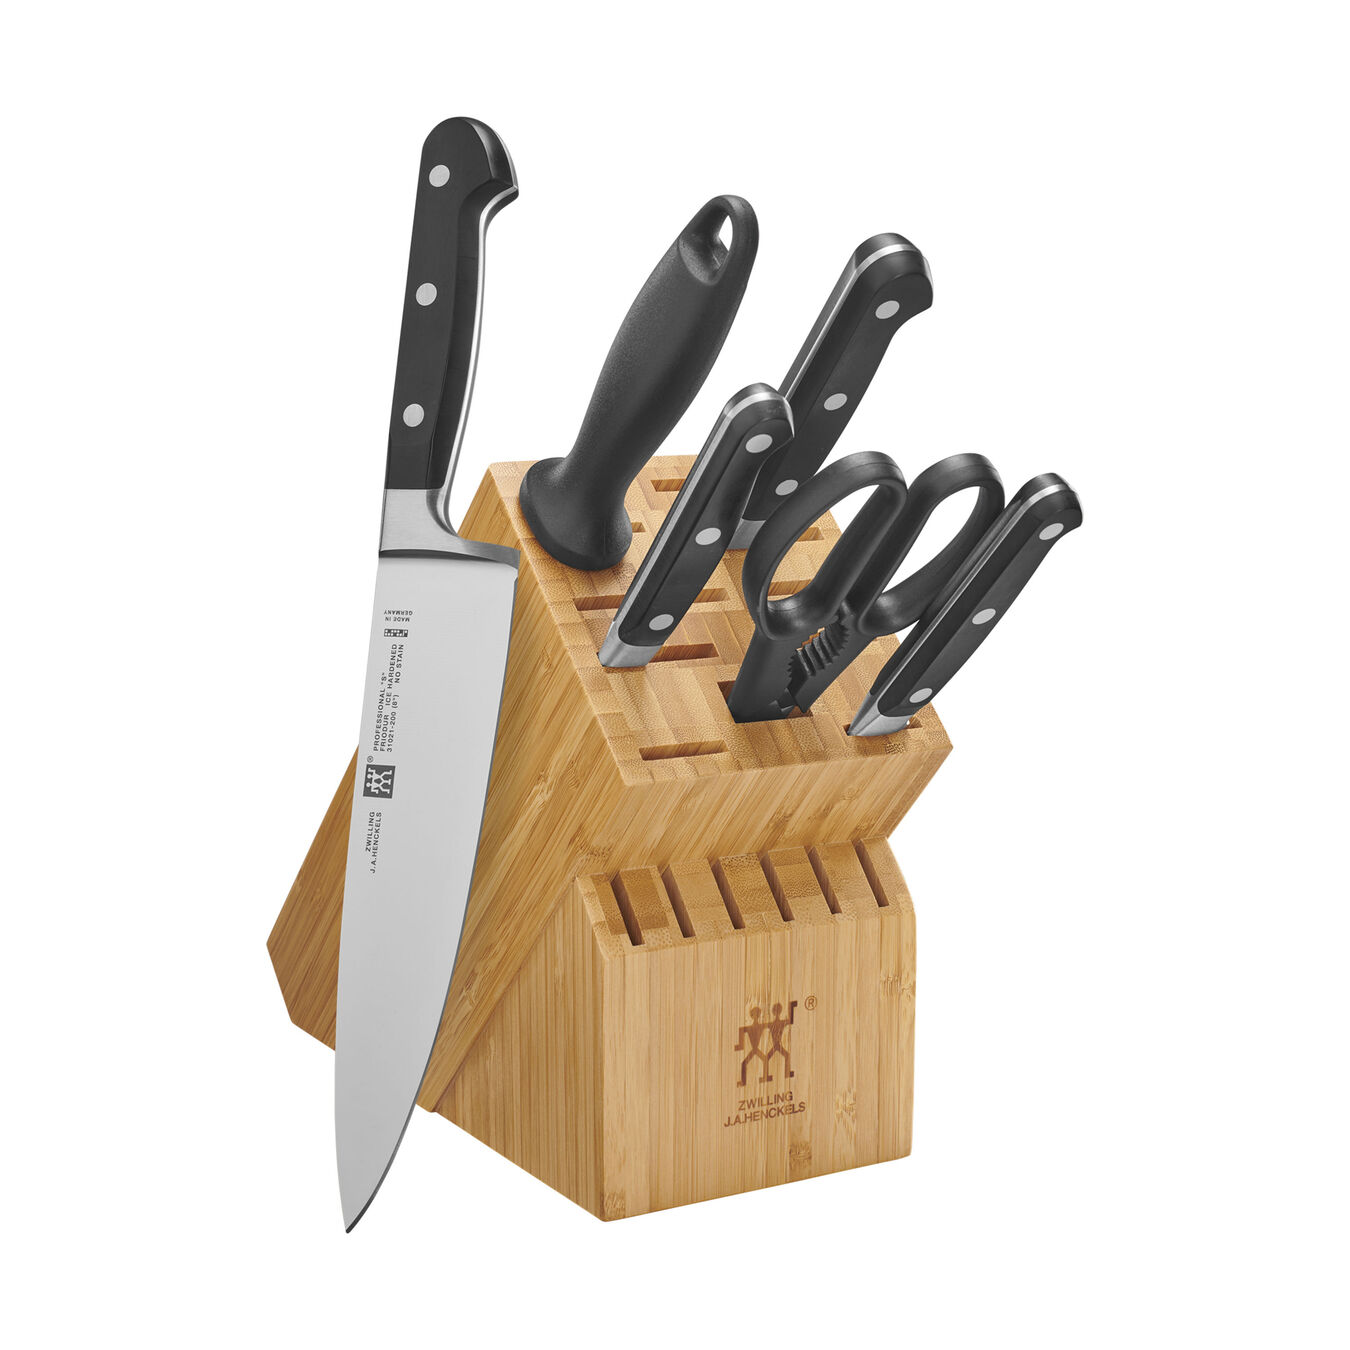 Buy ZWILLING Professional S Knife block set | ZWILLING.COM